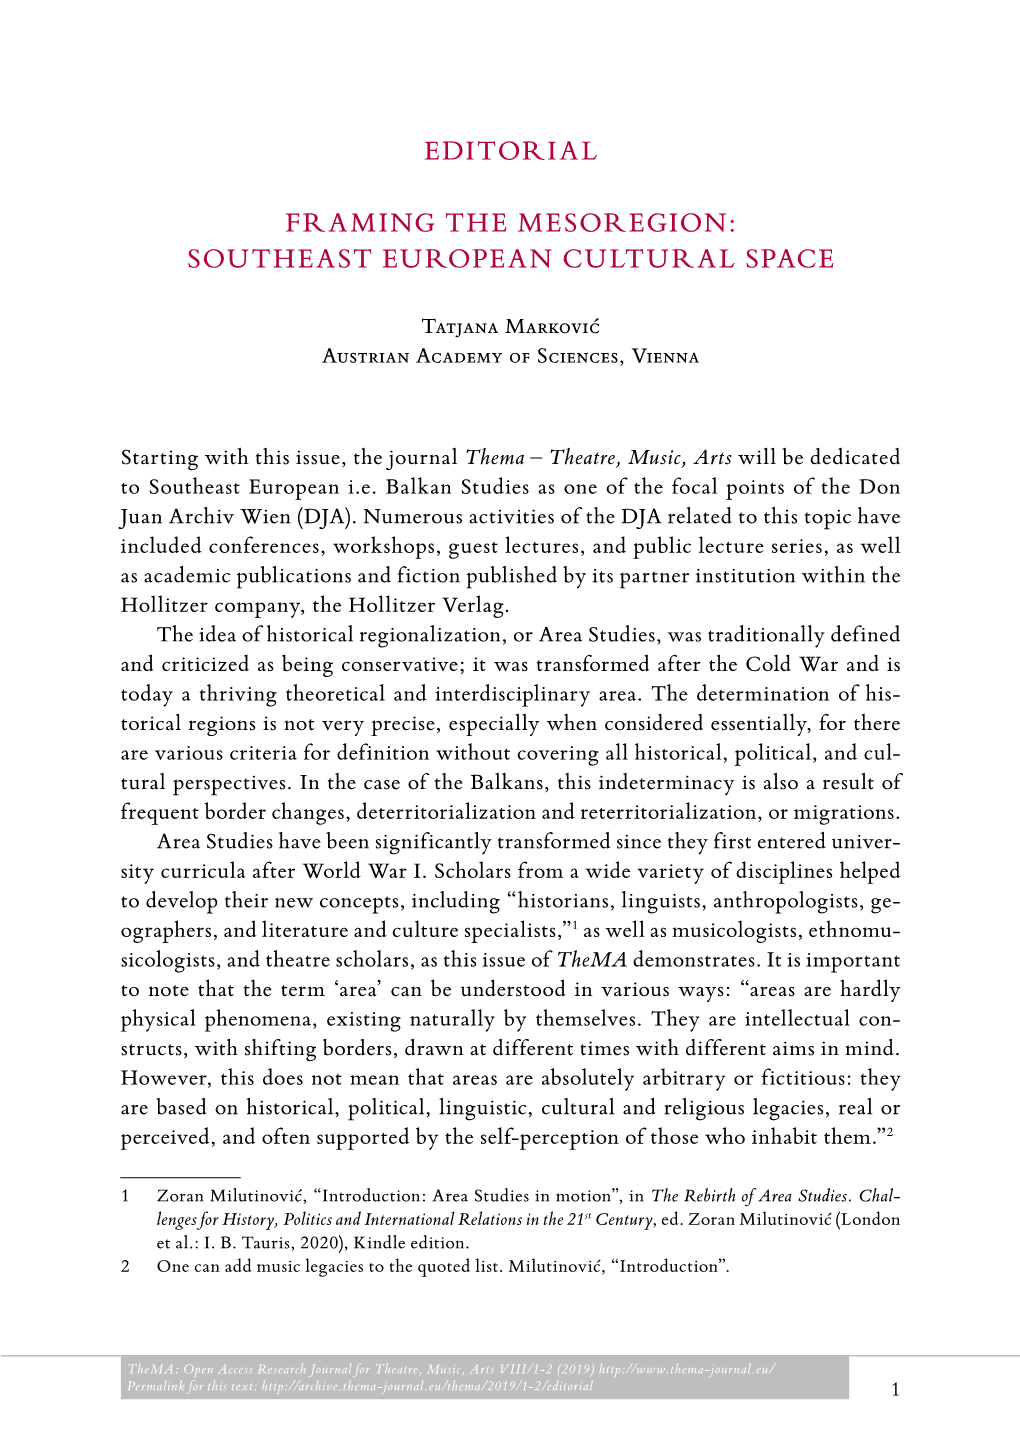 Editorial Framing the Mesoregion: Southeast European Cultural Space